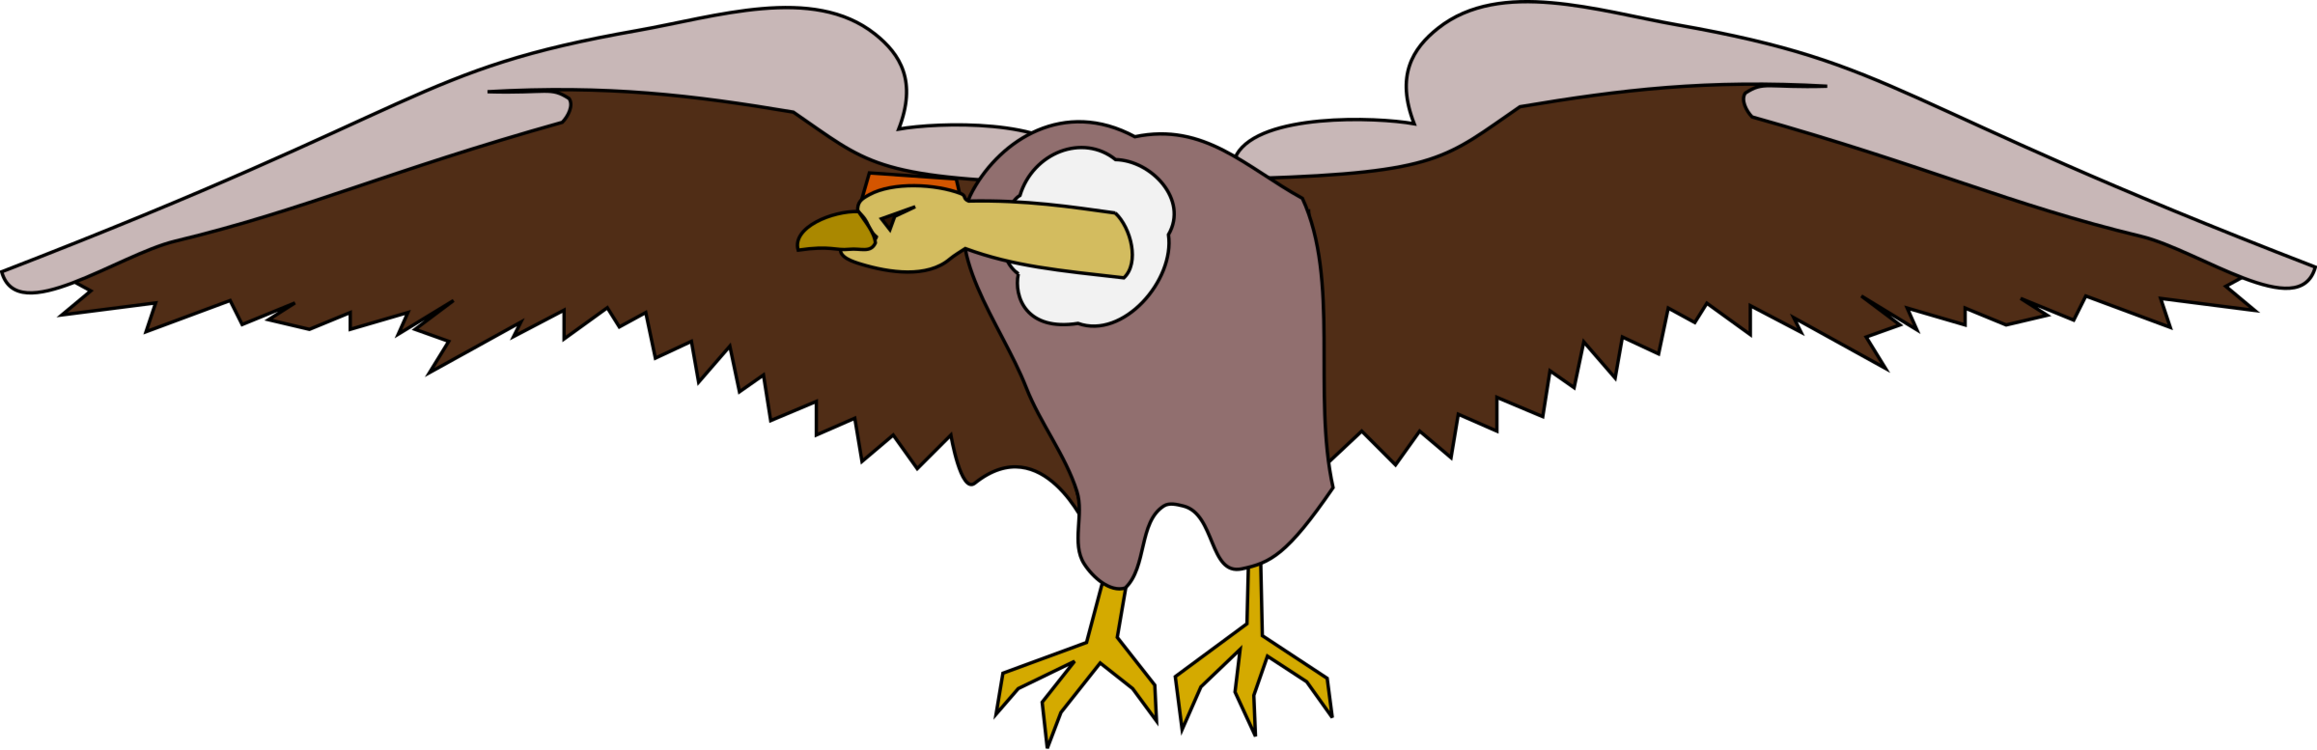 Eagle,Bald Eagle,Vulture